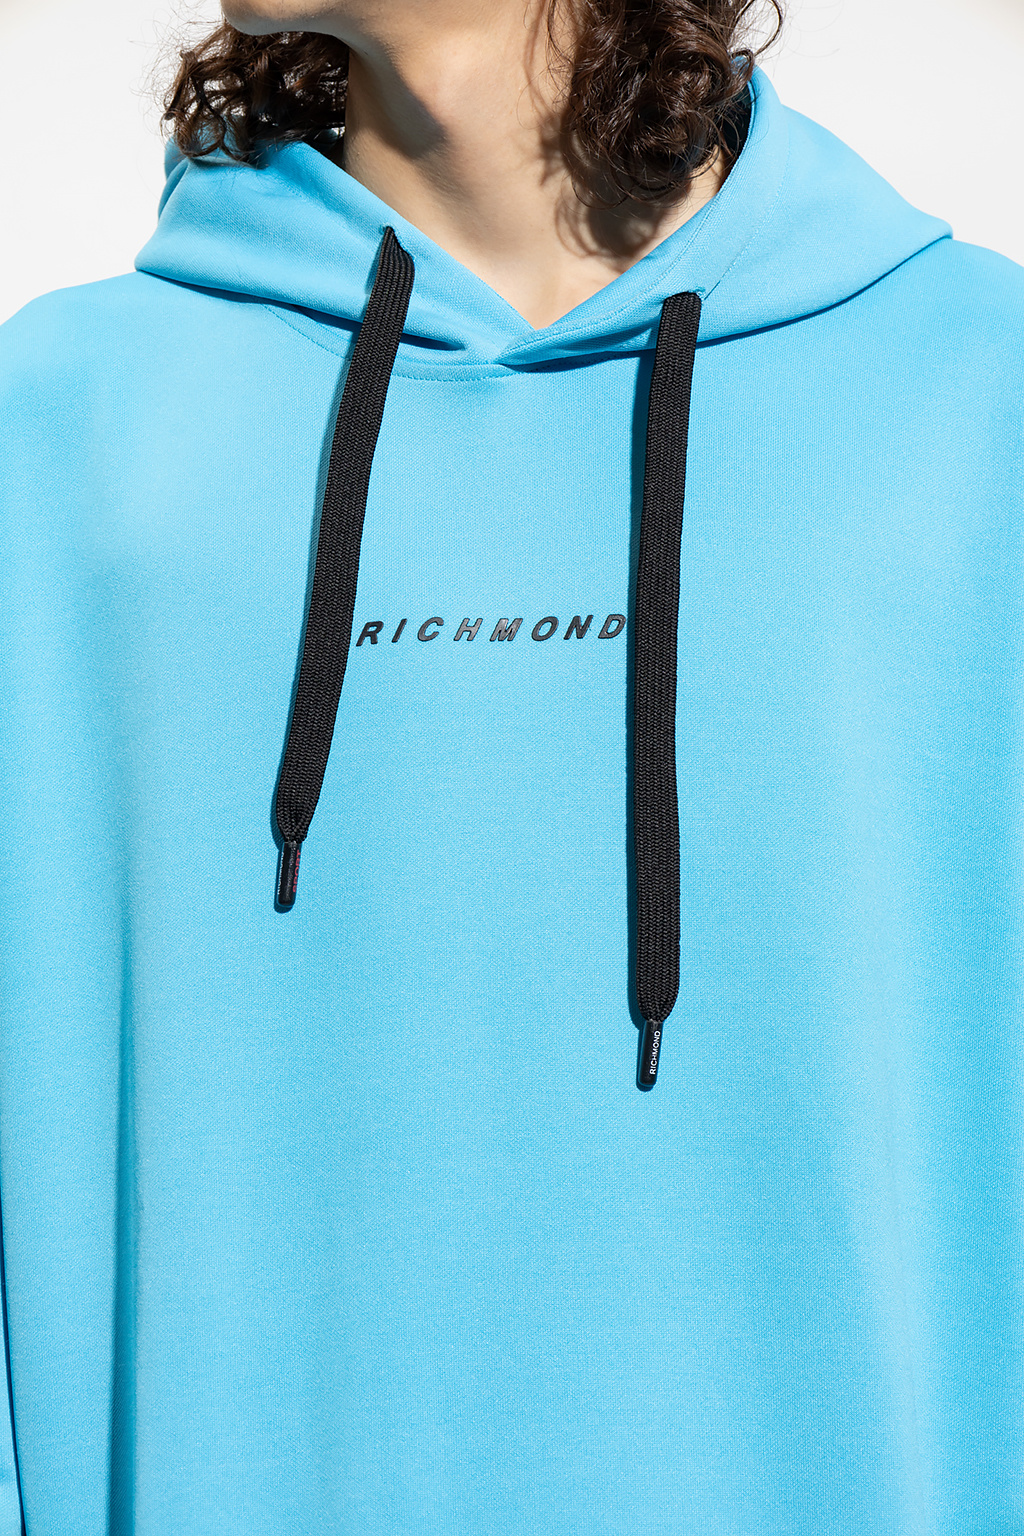 John Richmond hoodie Sweat-shirt with logo